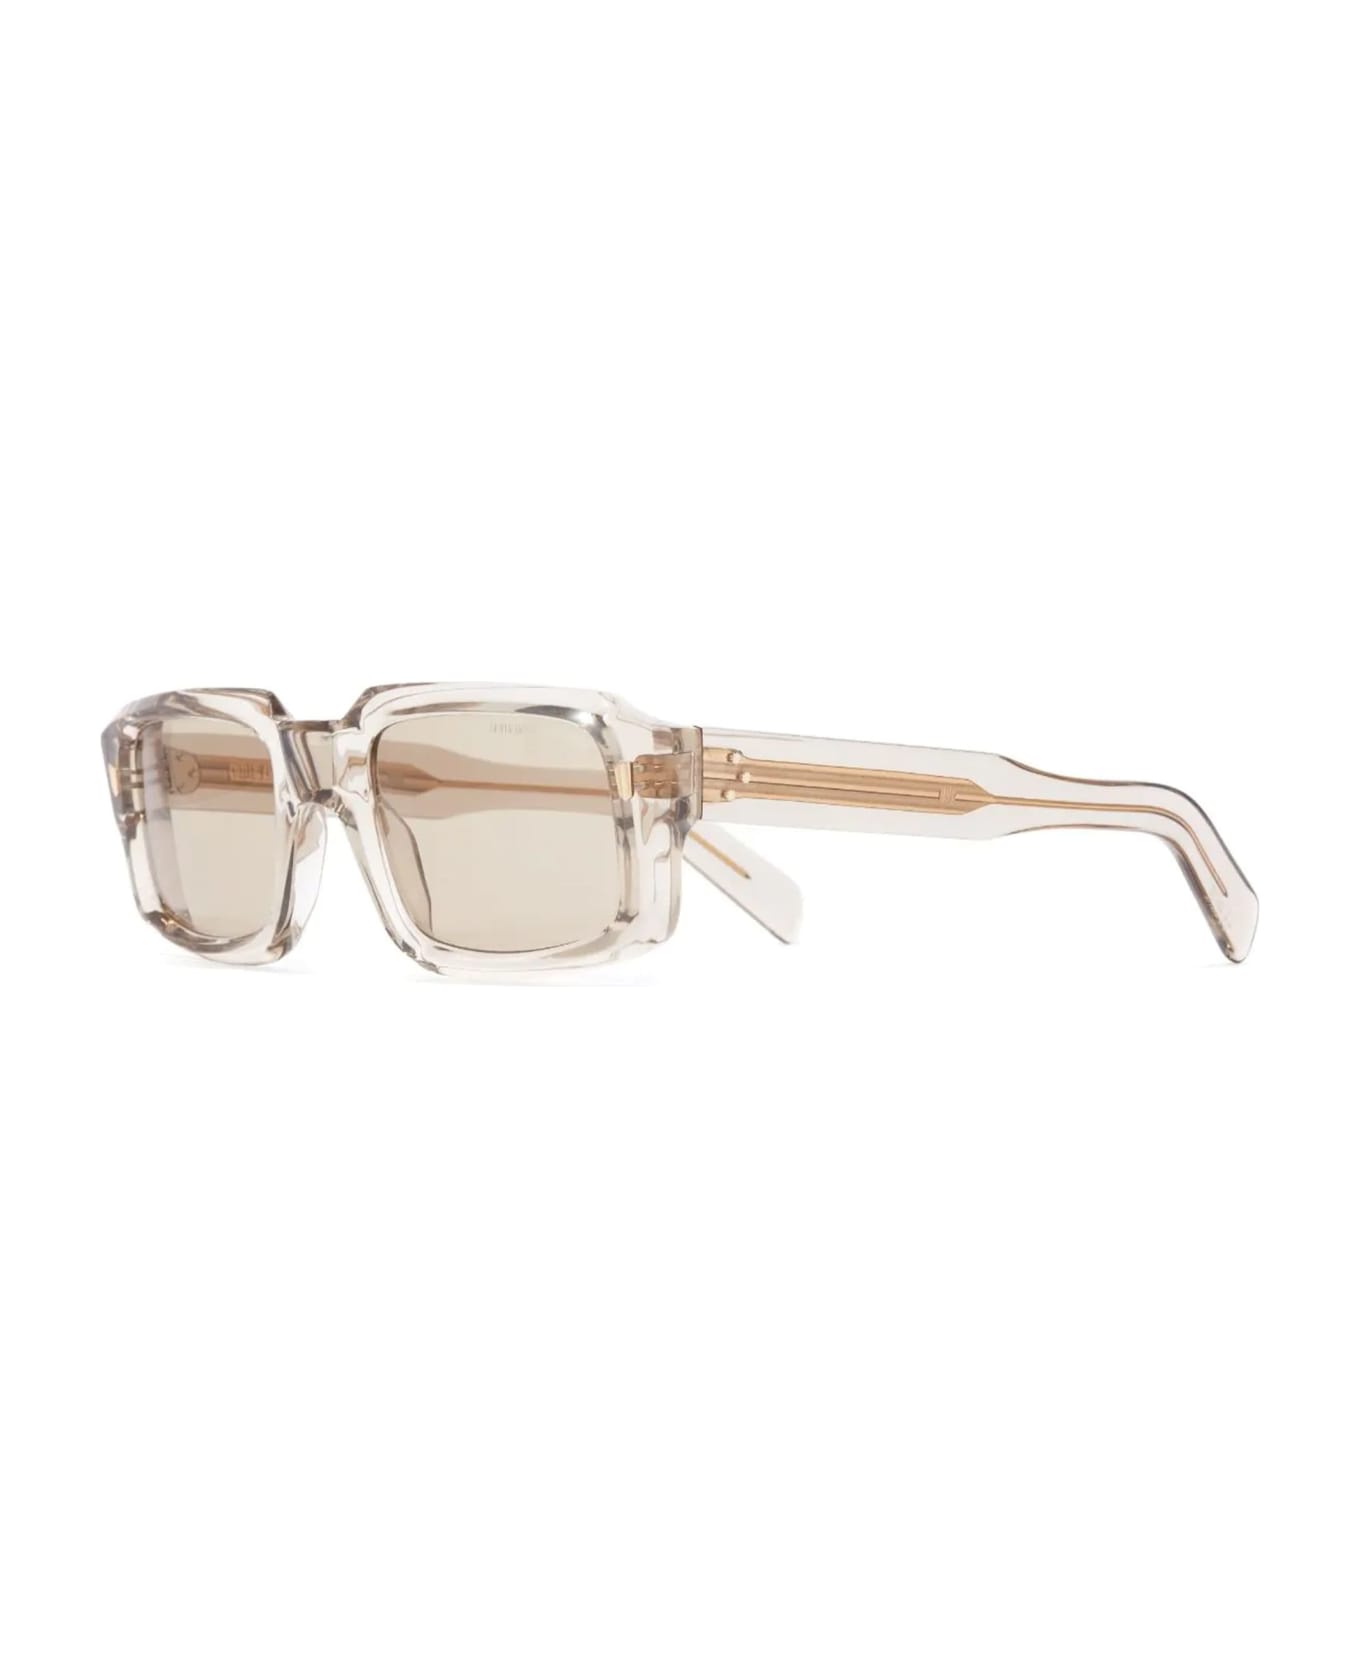 Cutler and Gross 9495 / Sand Crystal Sunglasses - transparent beige サングラス